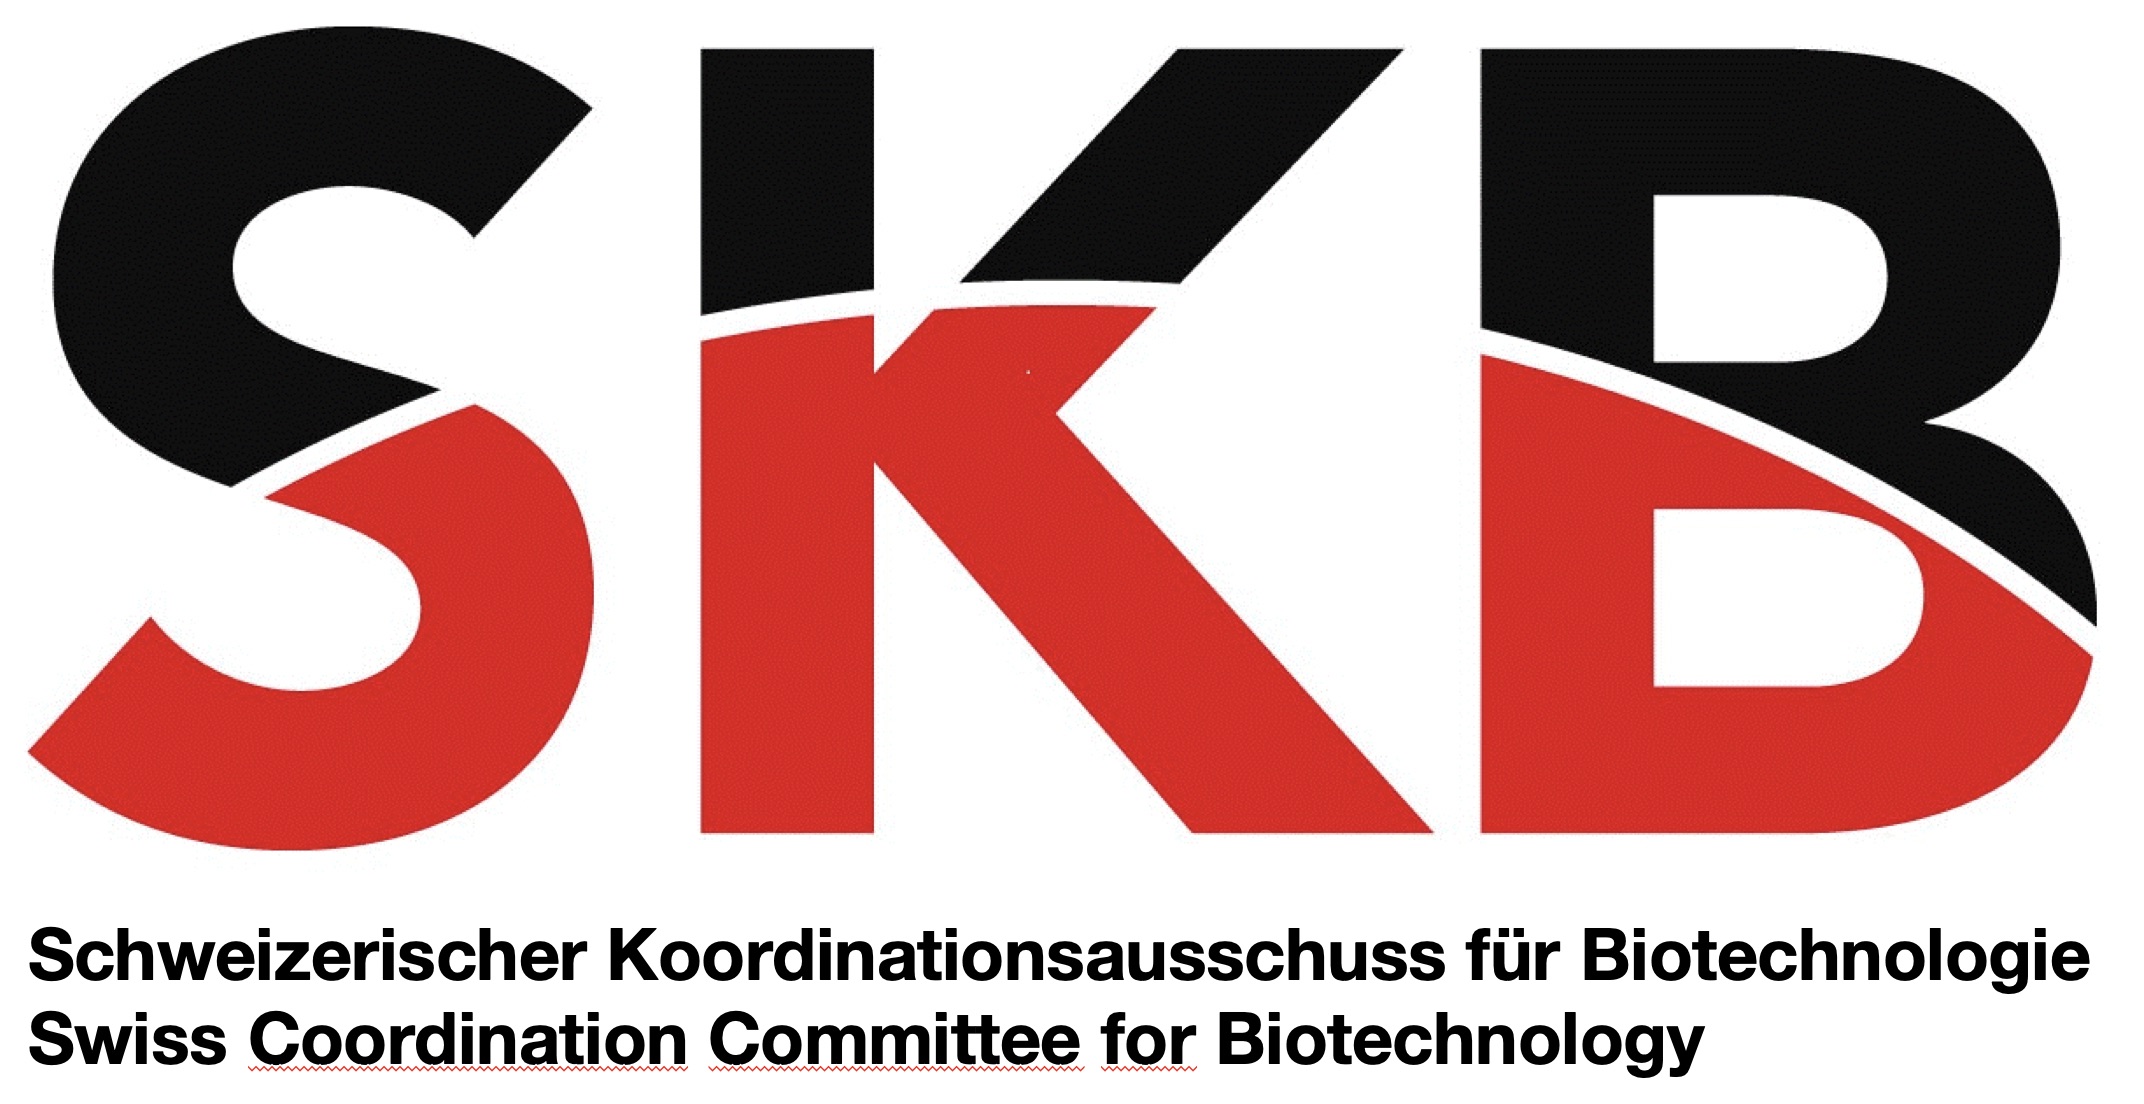 skb-logo-text.jpg